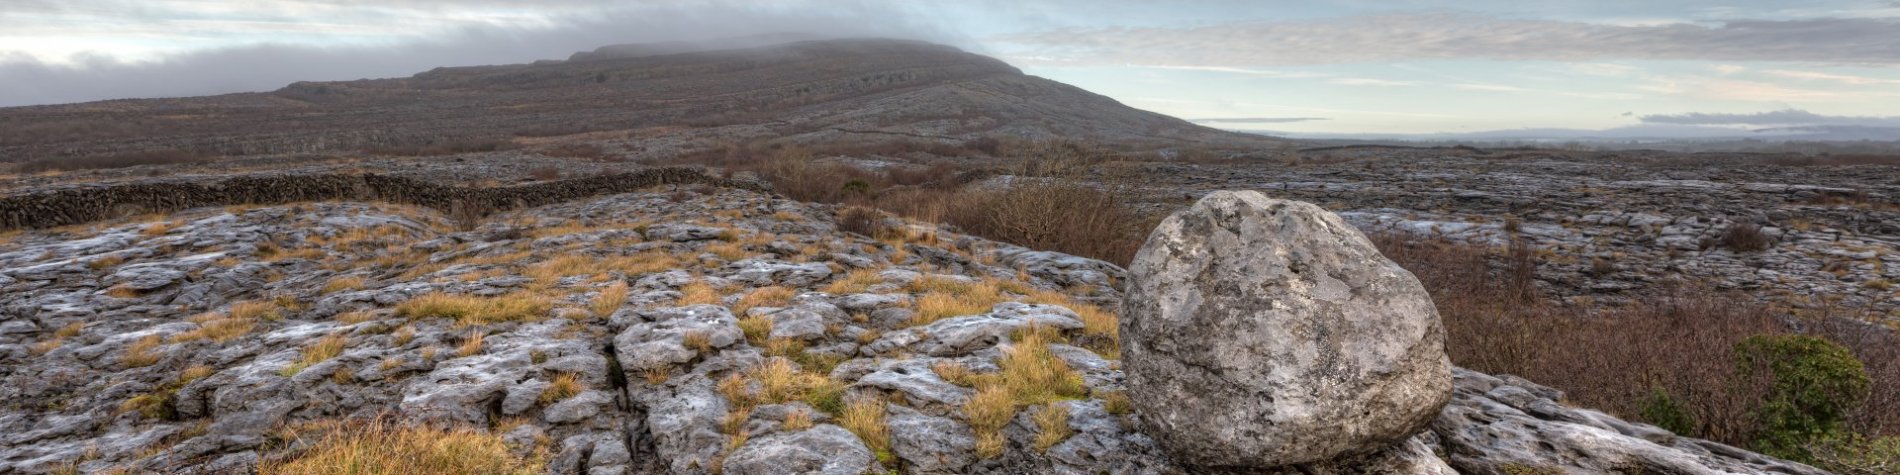 Burren's rough and intriguing Landscape 